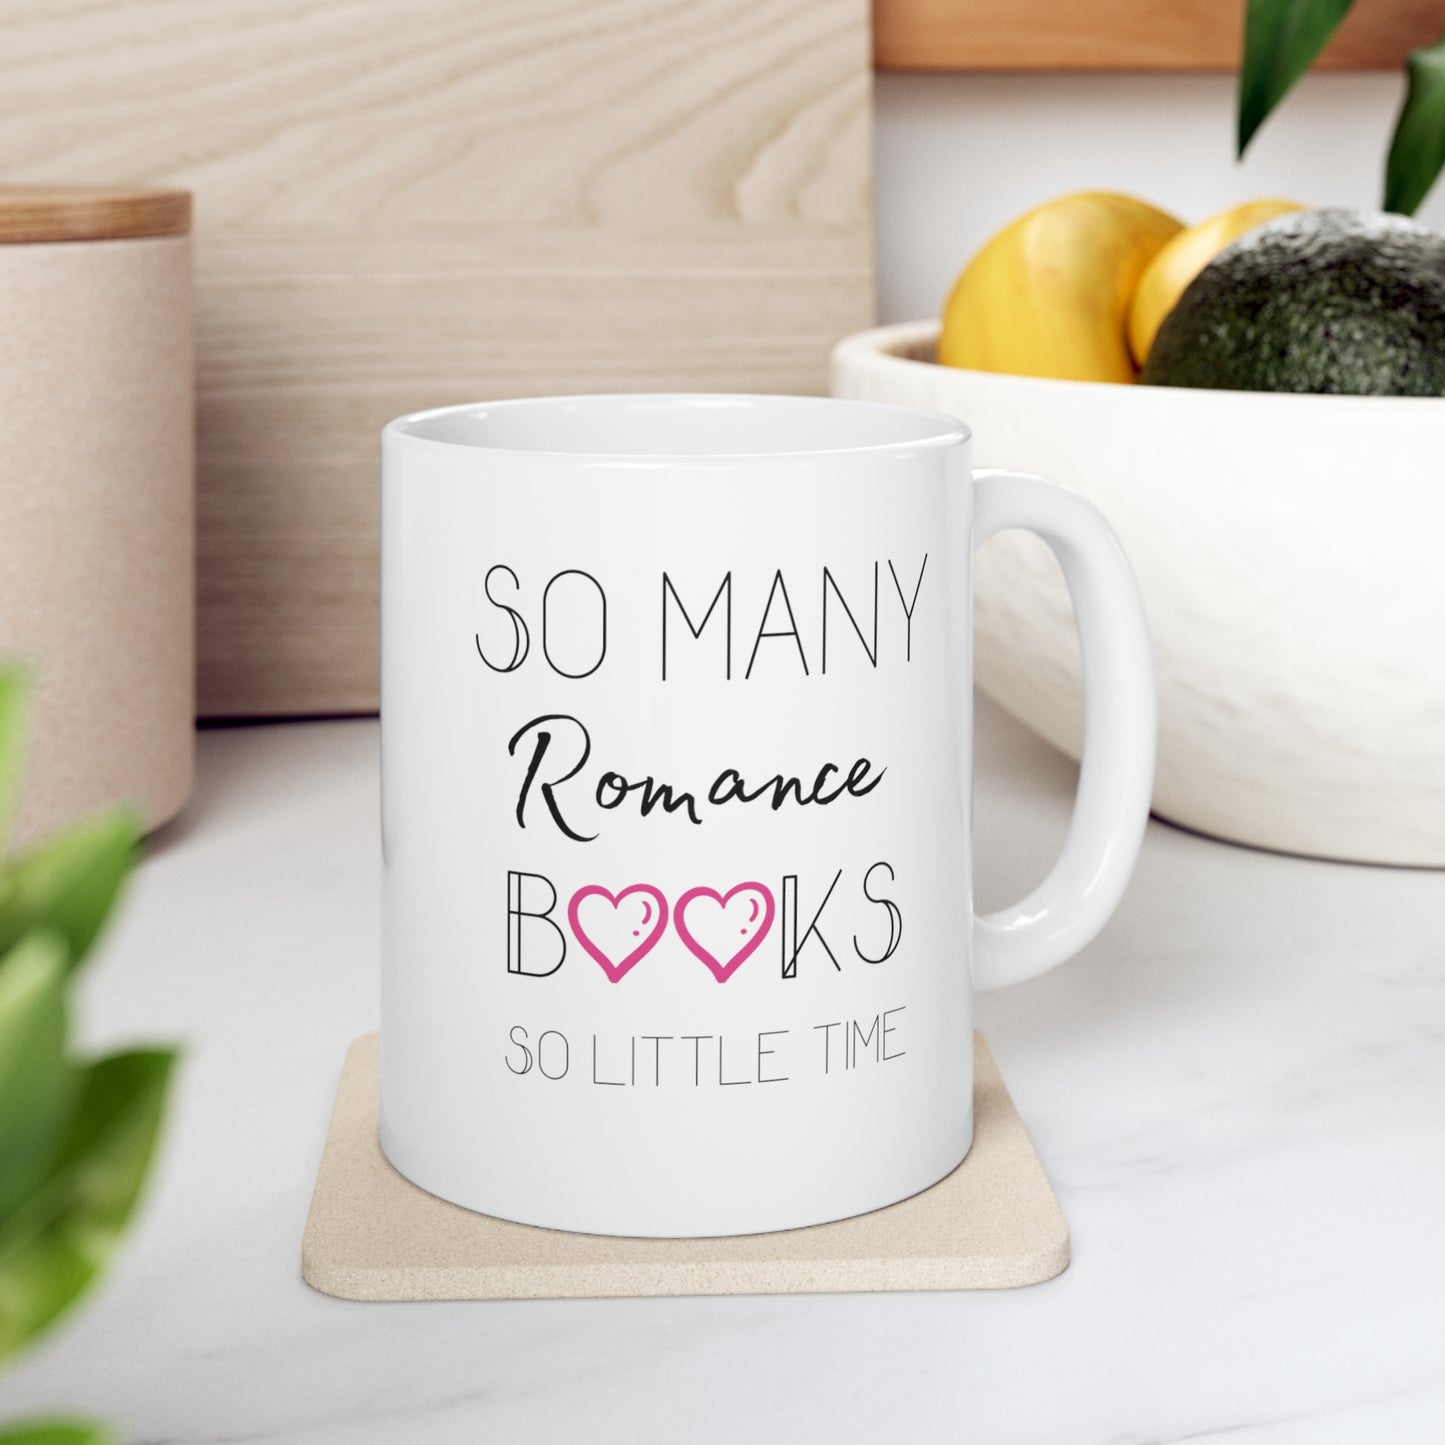 Romance Reader Mug; So Many Romance Books, So Little Time